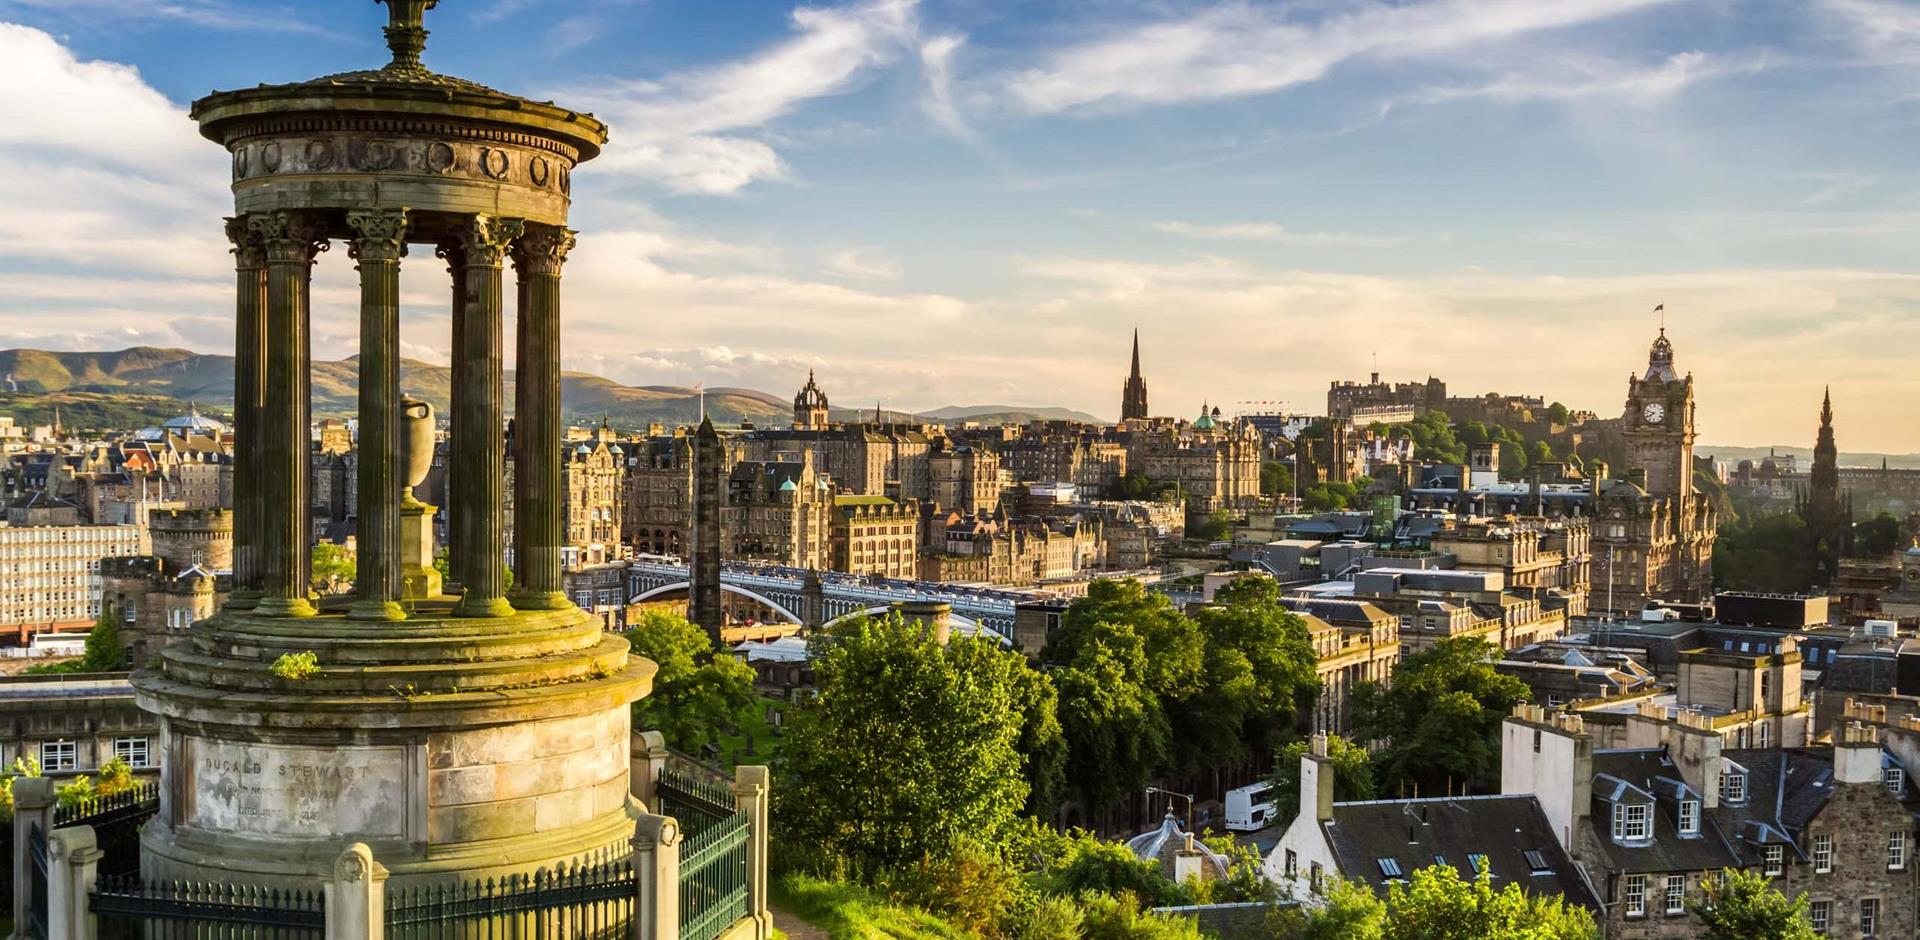 Edinburgh and Southern Scotland, view of the city of Edinburgh